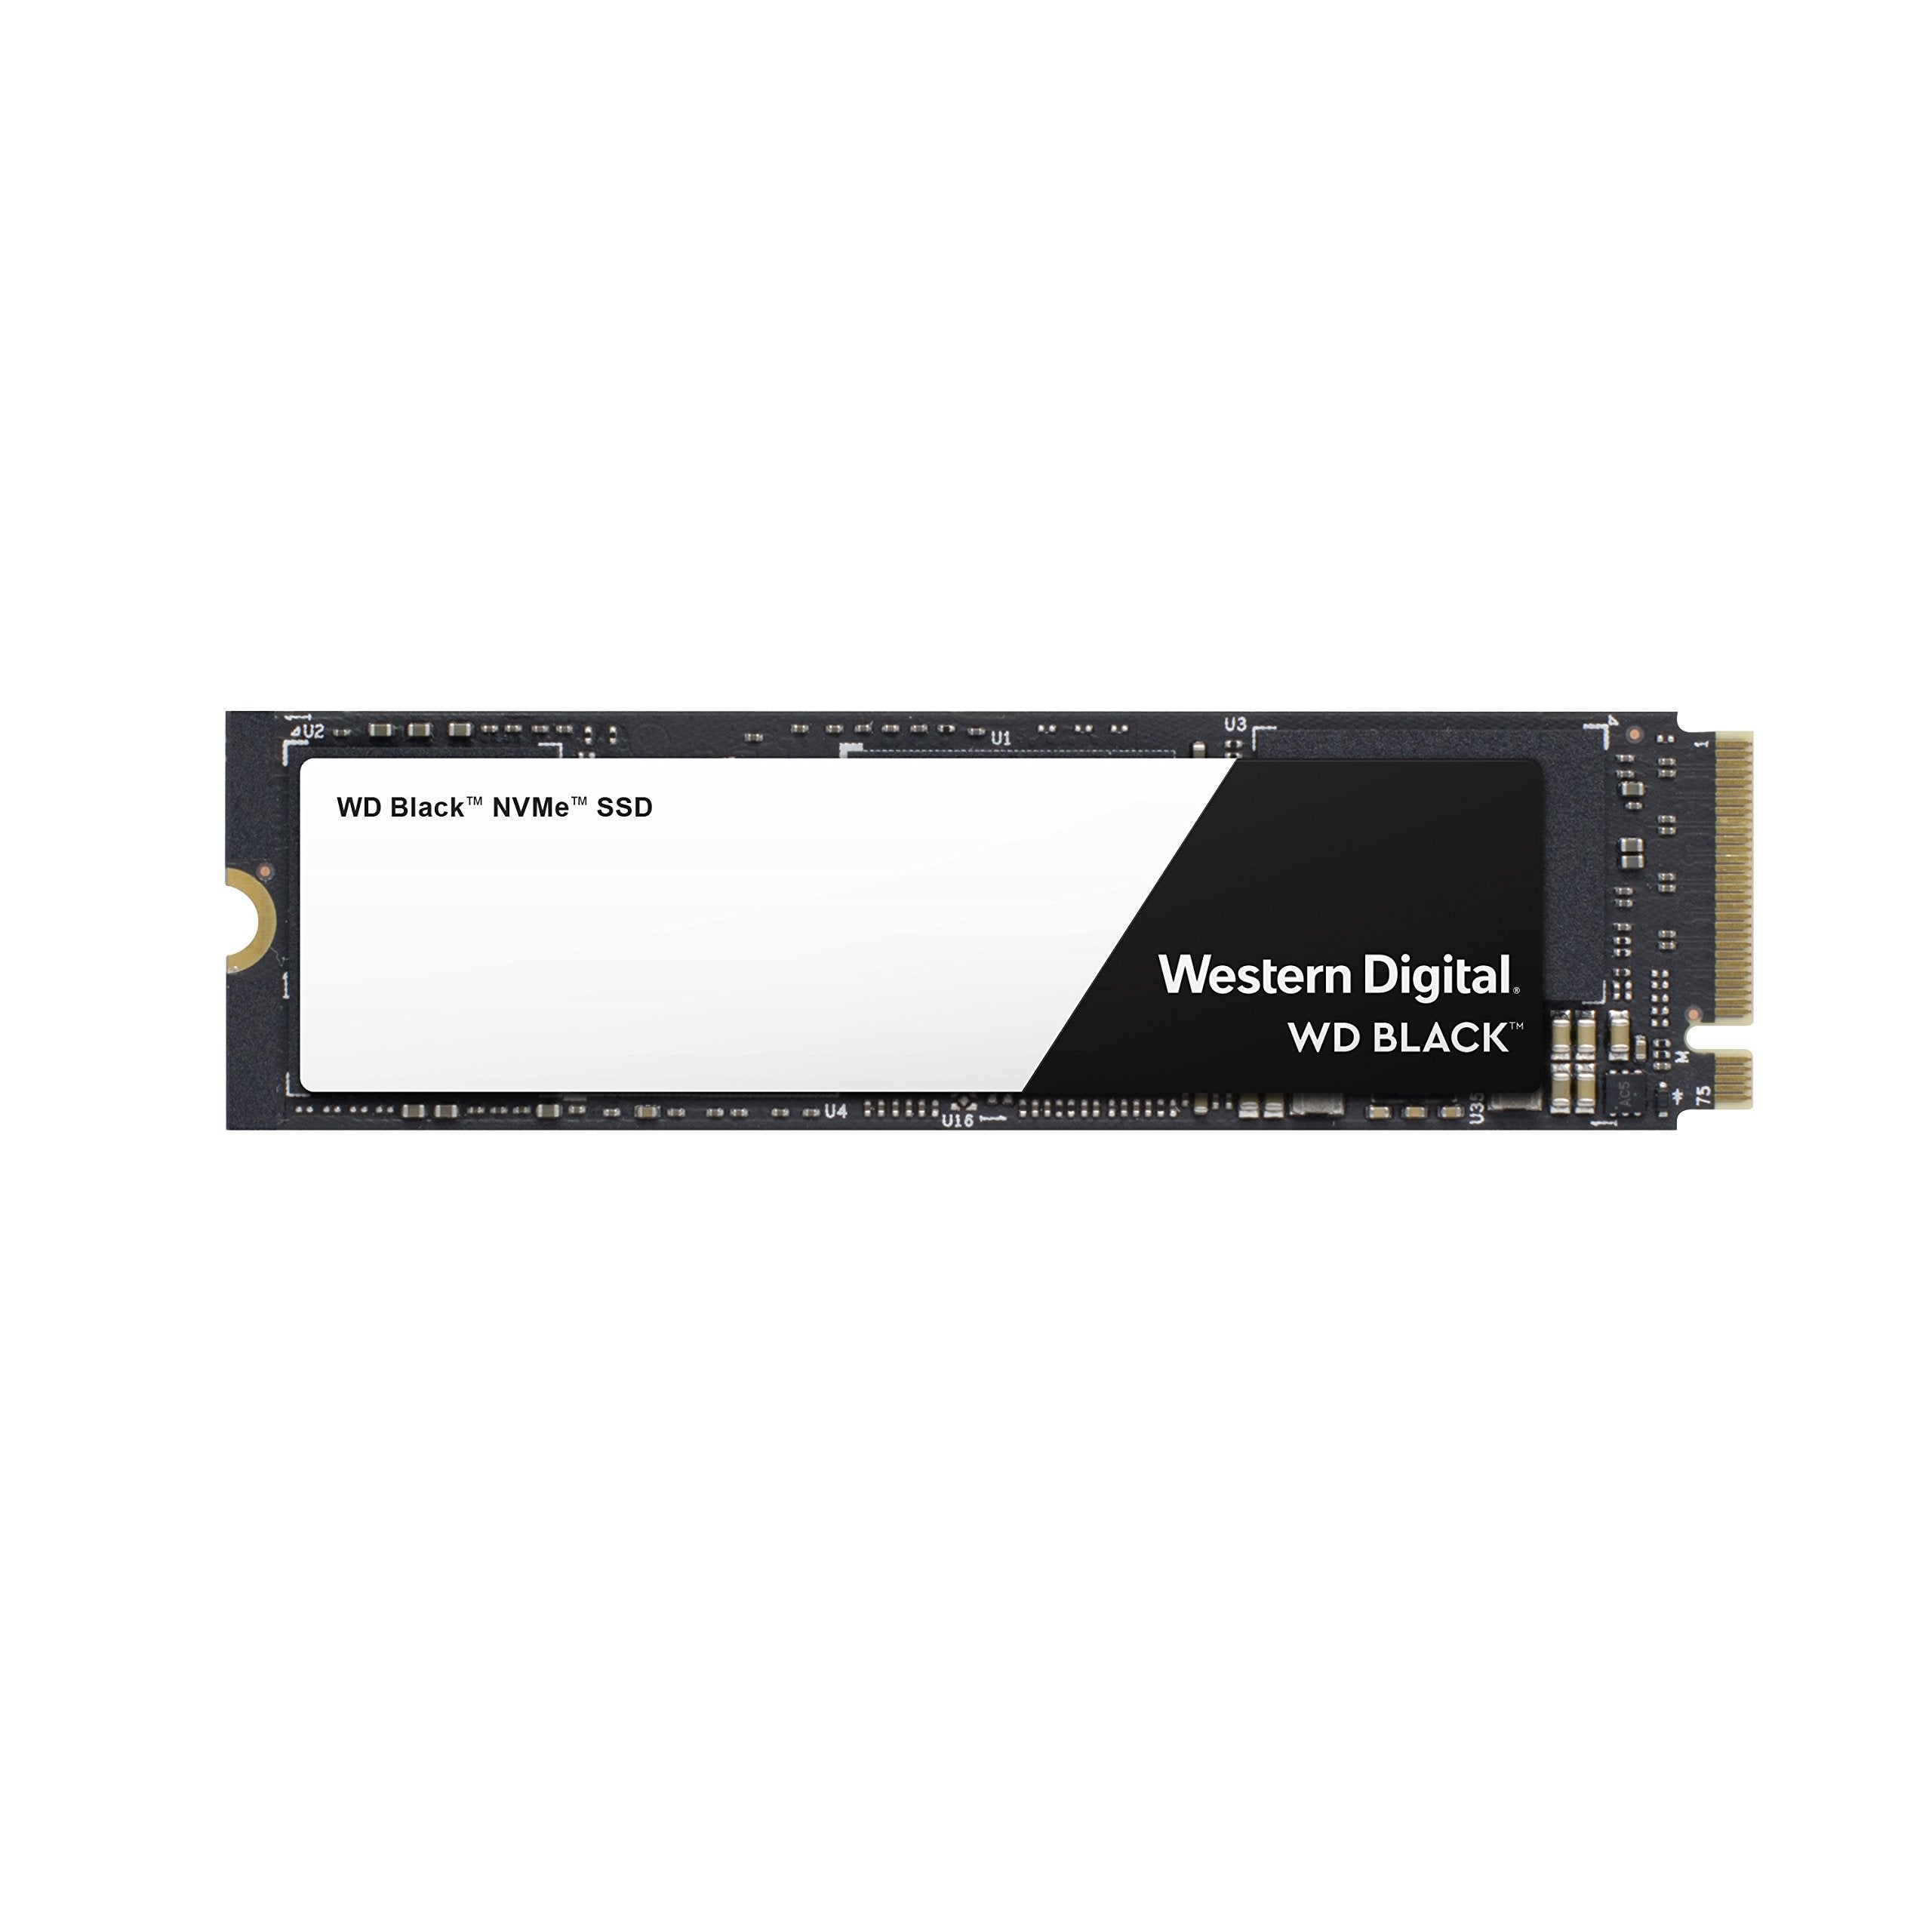 WD Black 250GB High-Performance NVMe PCIe Internal SSD - M.2 2280, 8 Gb/s - WDS250G2X0C (Open Box, Like New)